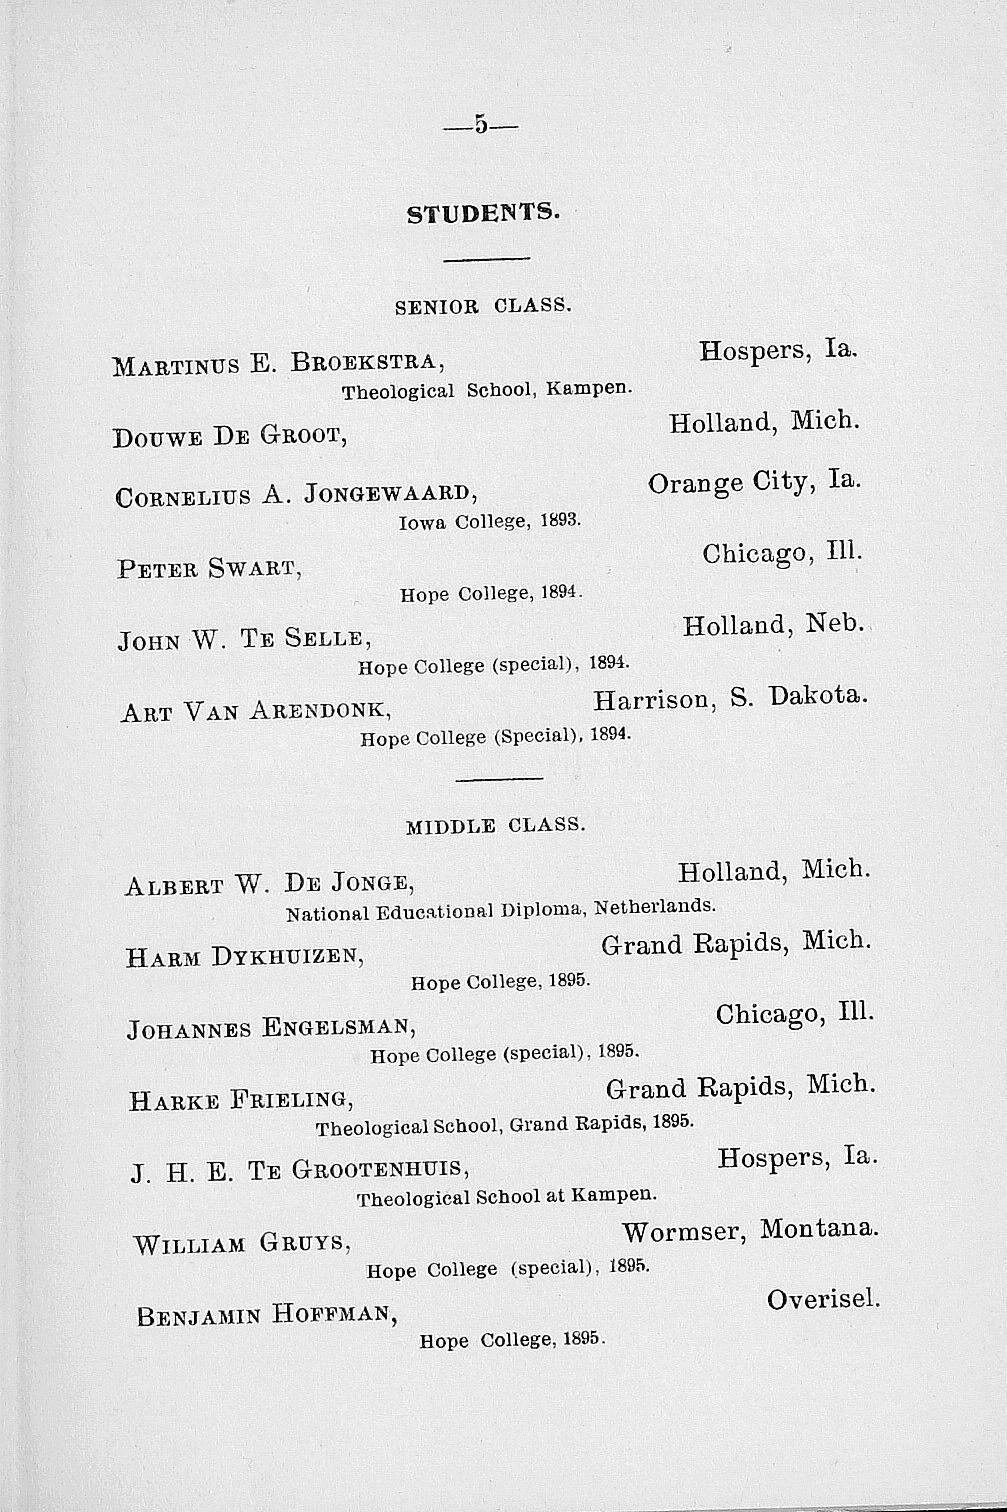 5 STUDENTS. SENIOR CLASS. Martinus E. Broekstra, Theological School, Karapen. Douwe Be Groot, Hospers, la. Holland, Mich. Cornelius A. Jongewaard, Iowa College, 1893. Peter Swart, Hope College, 1894.